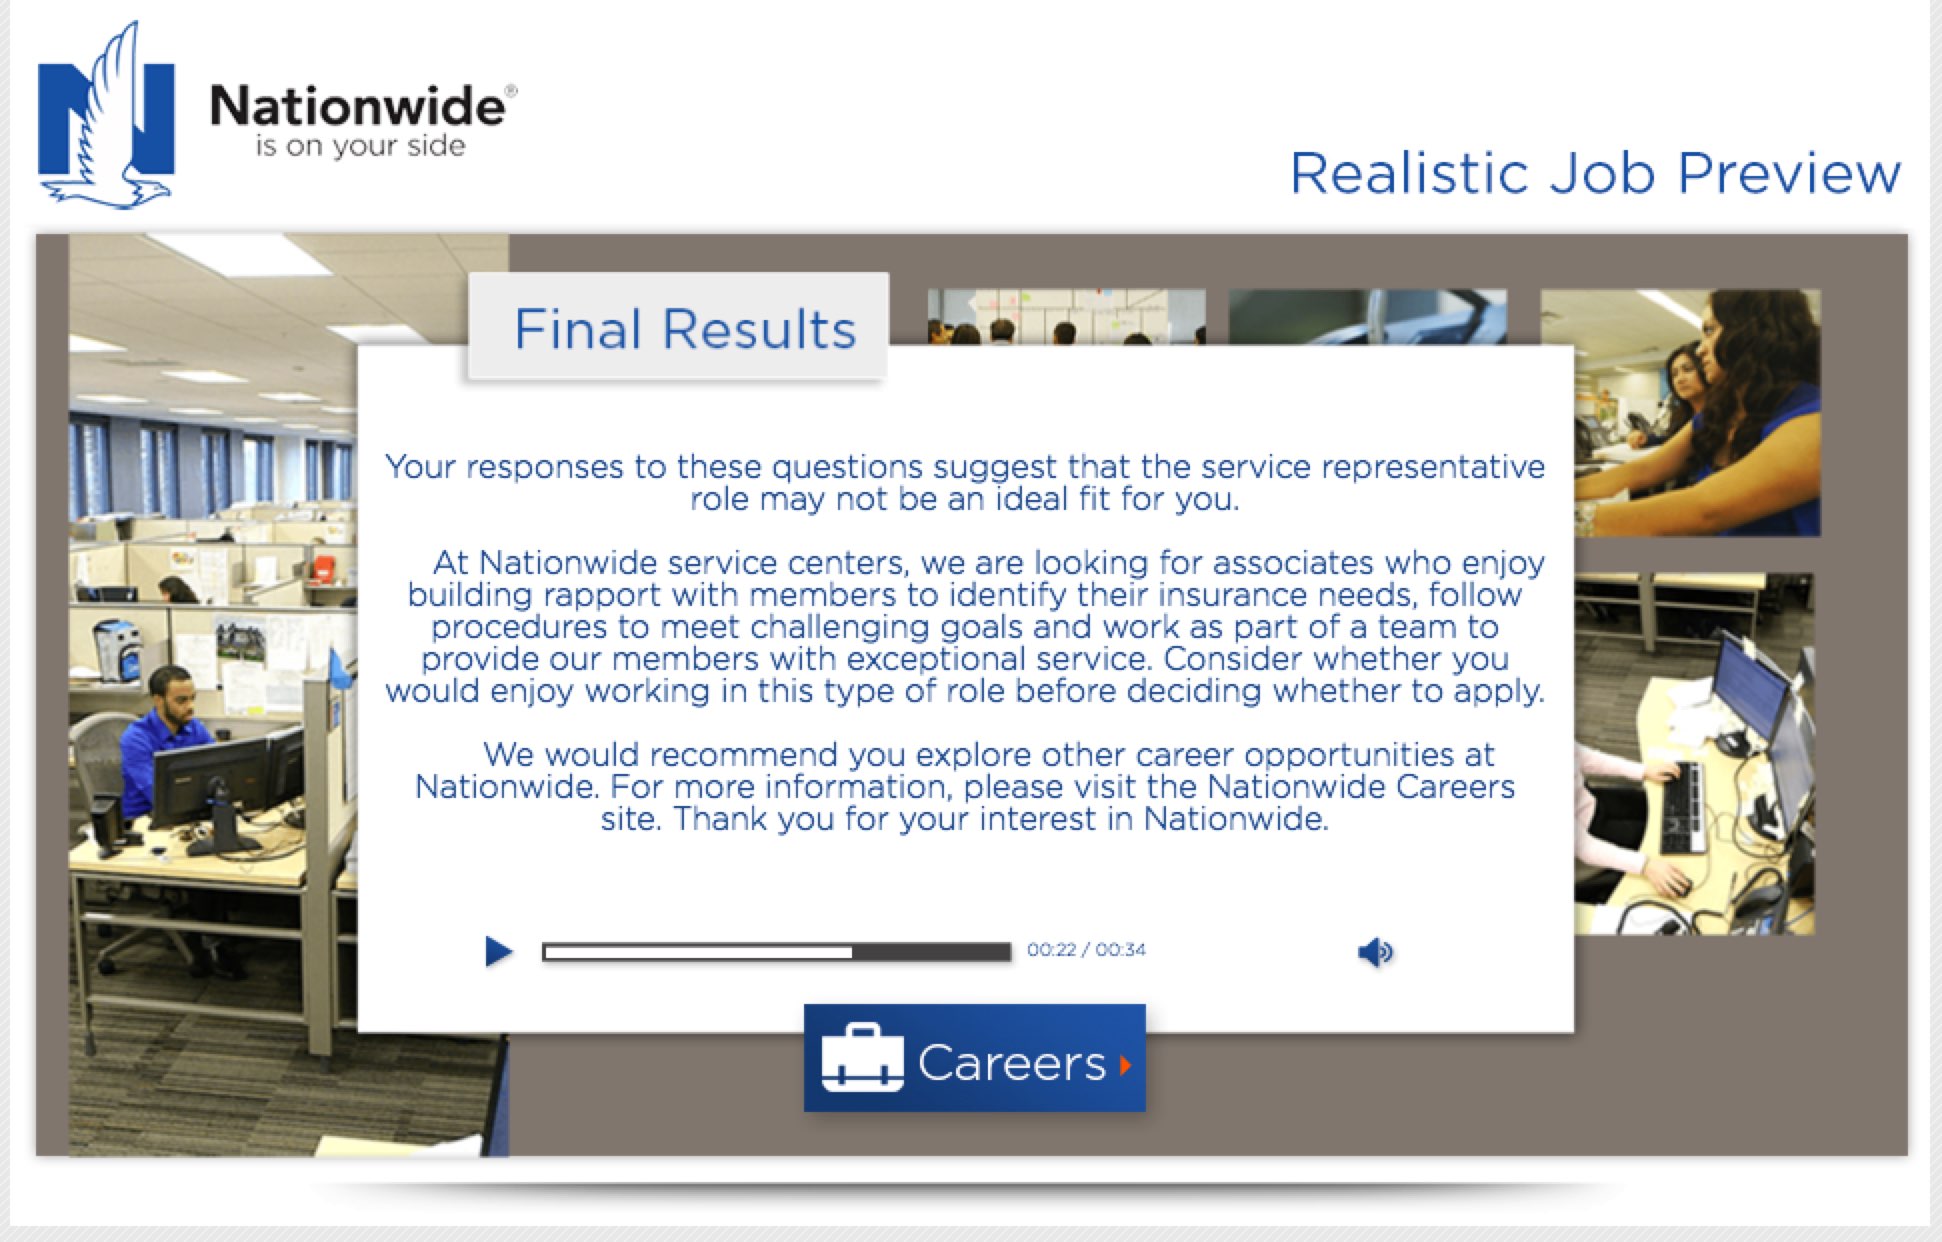 Realistic Job Preview -- Nationwide Insurance Customer Service Job Description | Ongig Blog